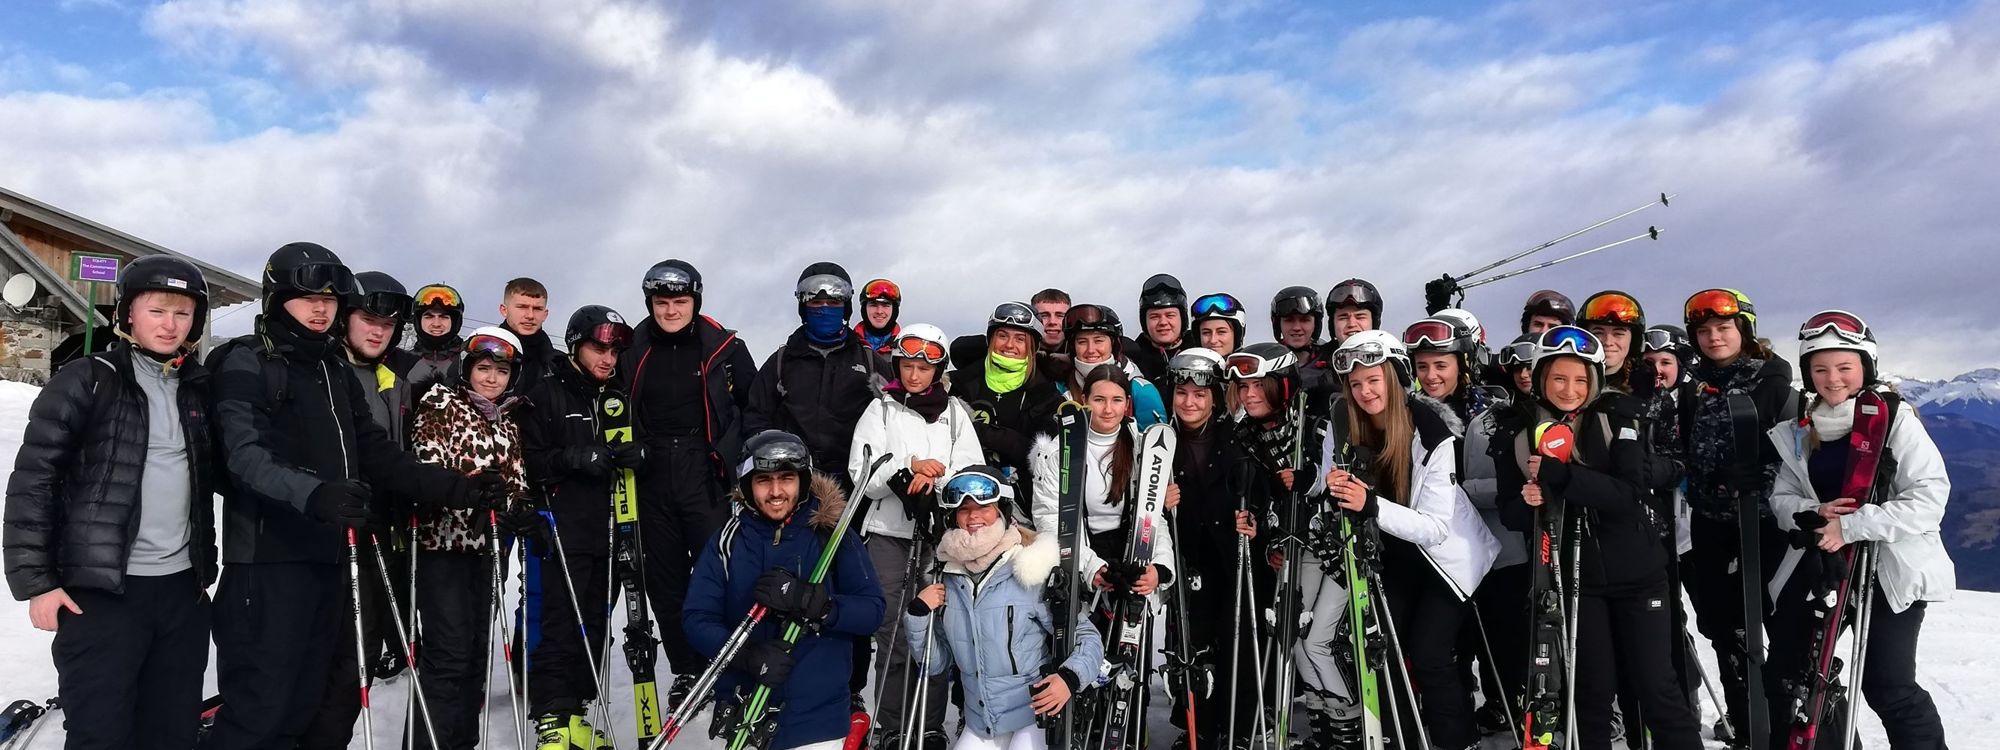 Group ski shot